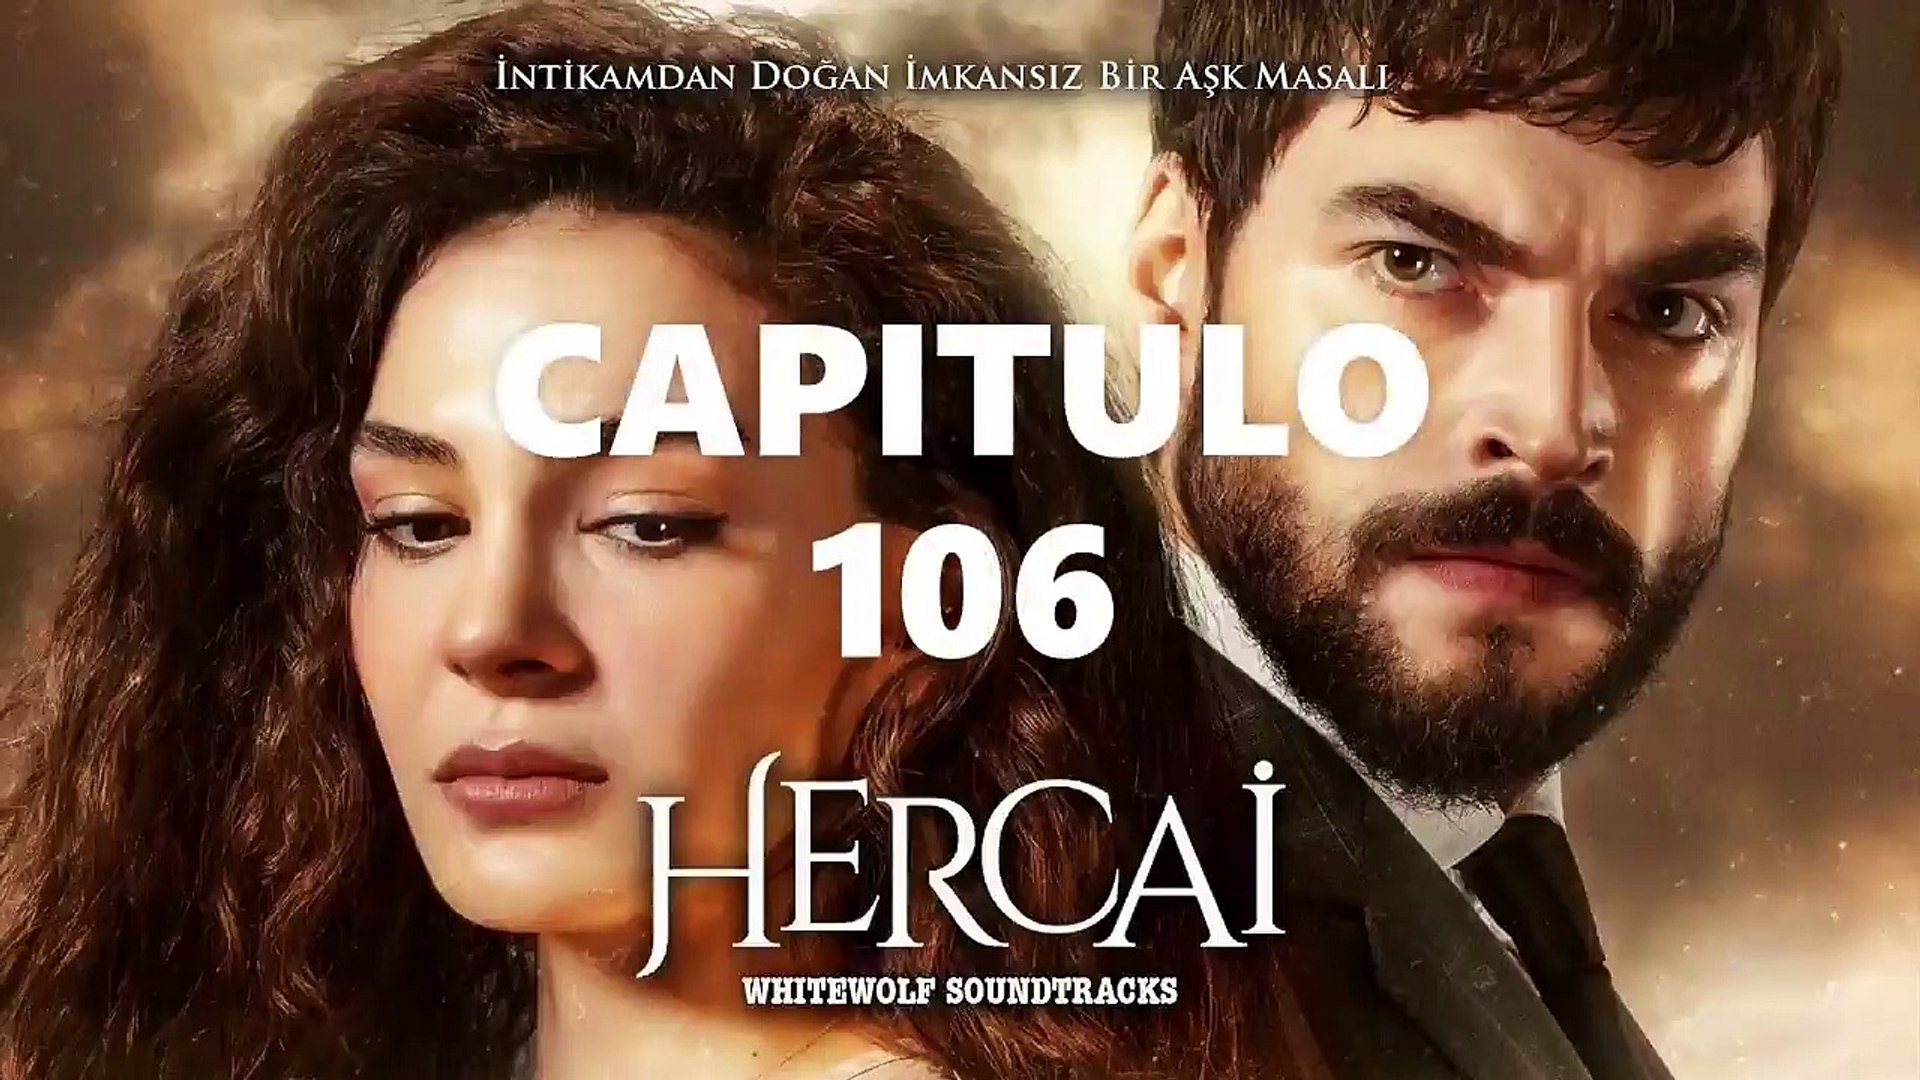 HERCAI CAPITULO 106 LATINO ❤ [2021] | NOVELA - COMPLETO HD - Vídeo  Dailymotion